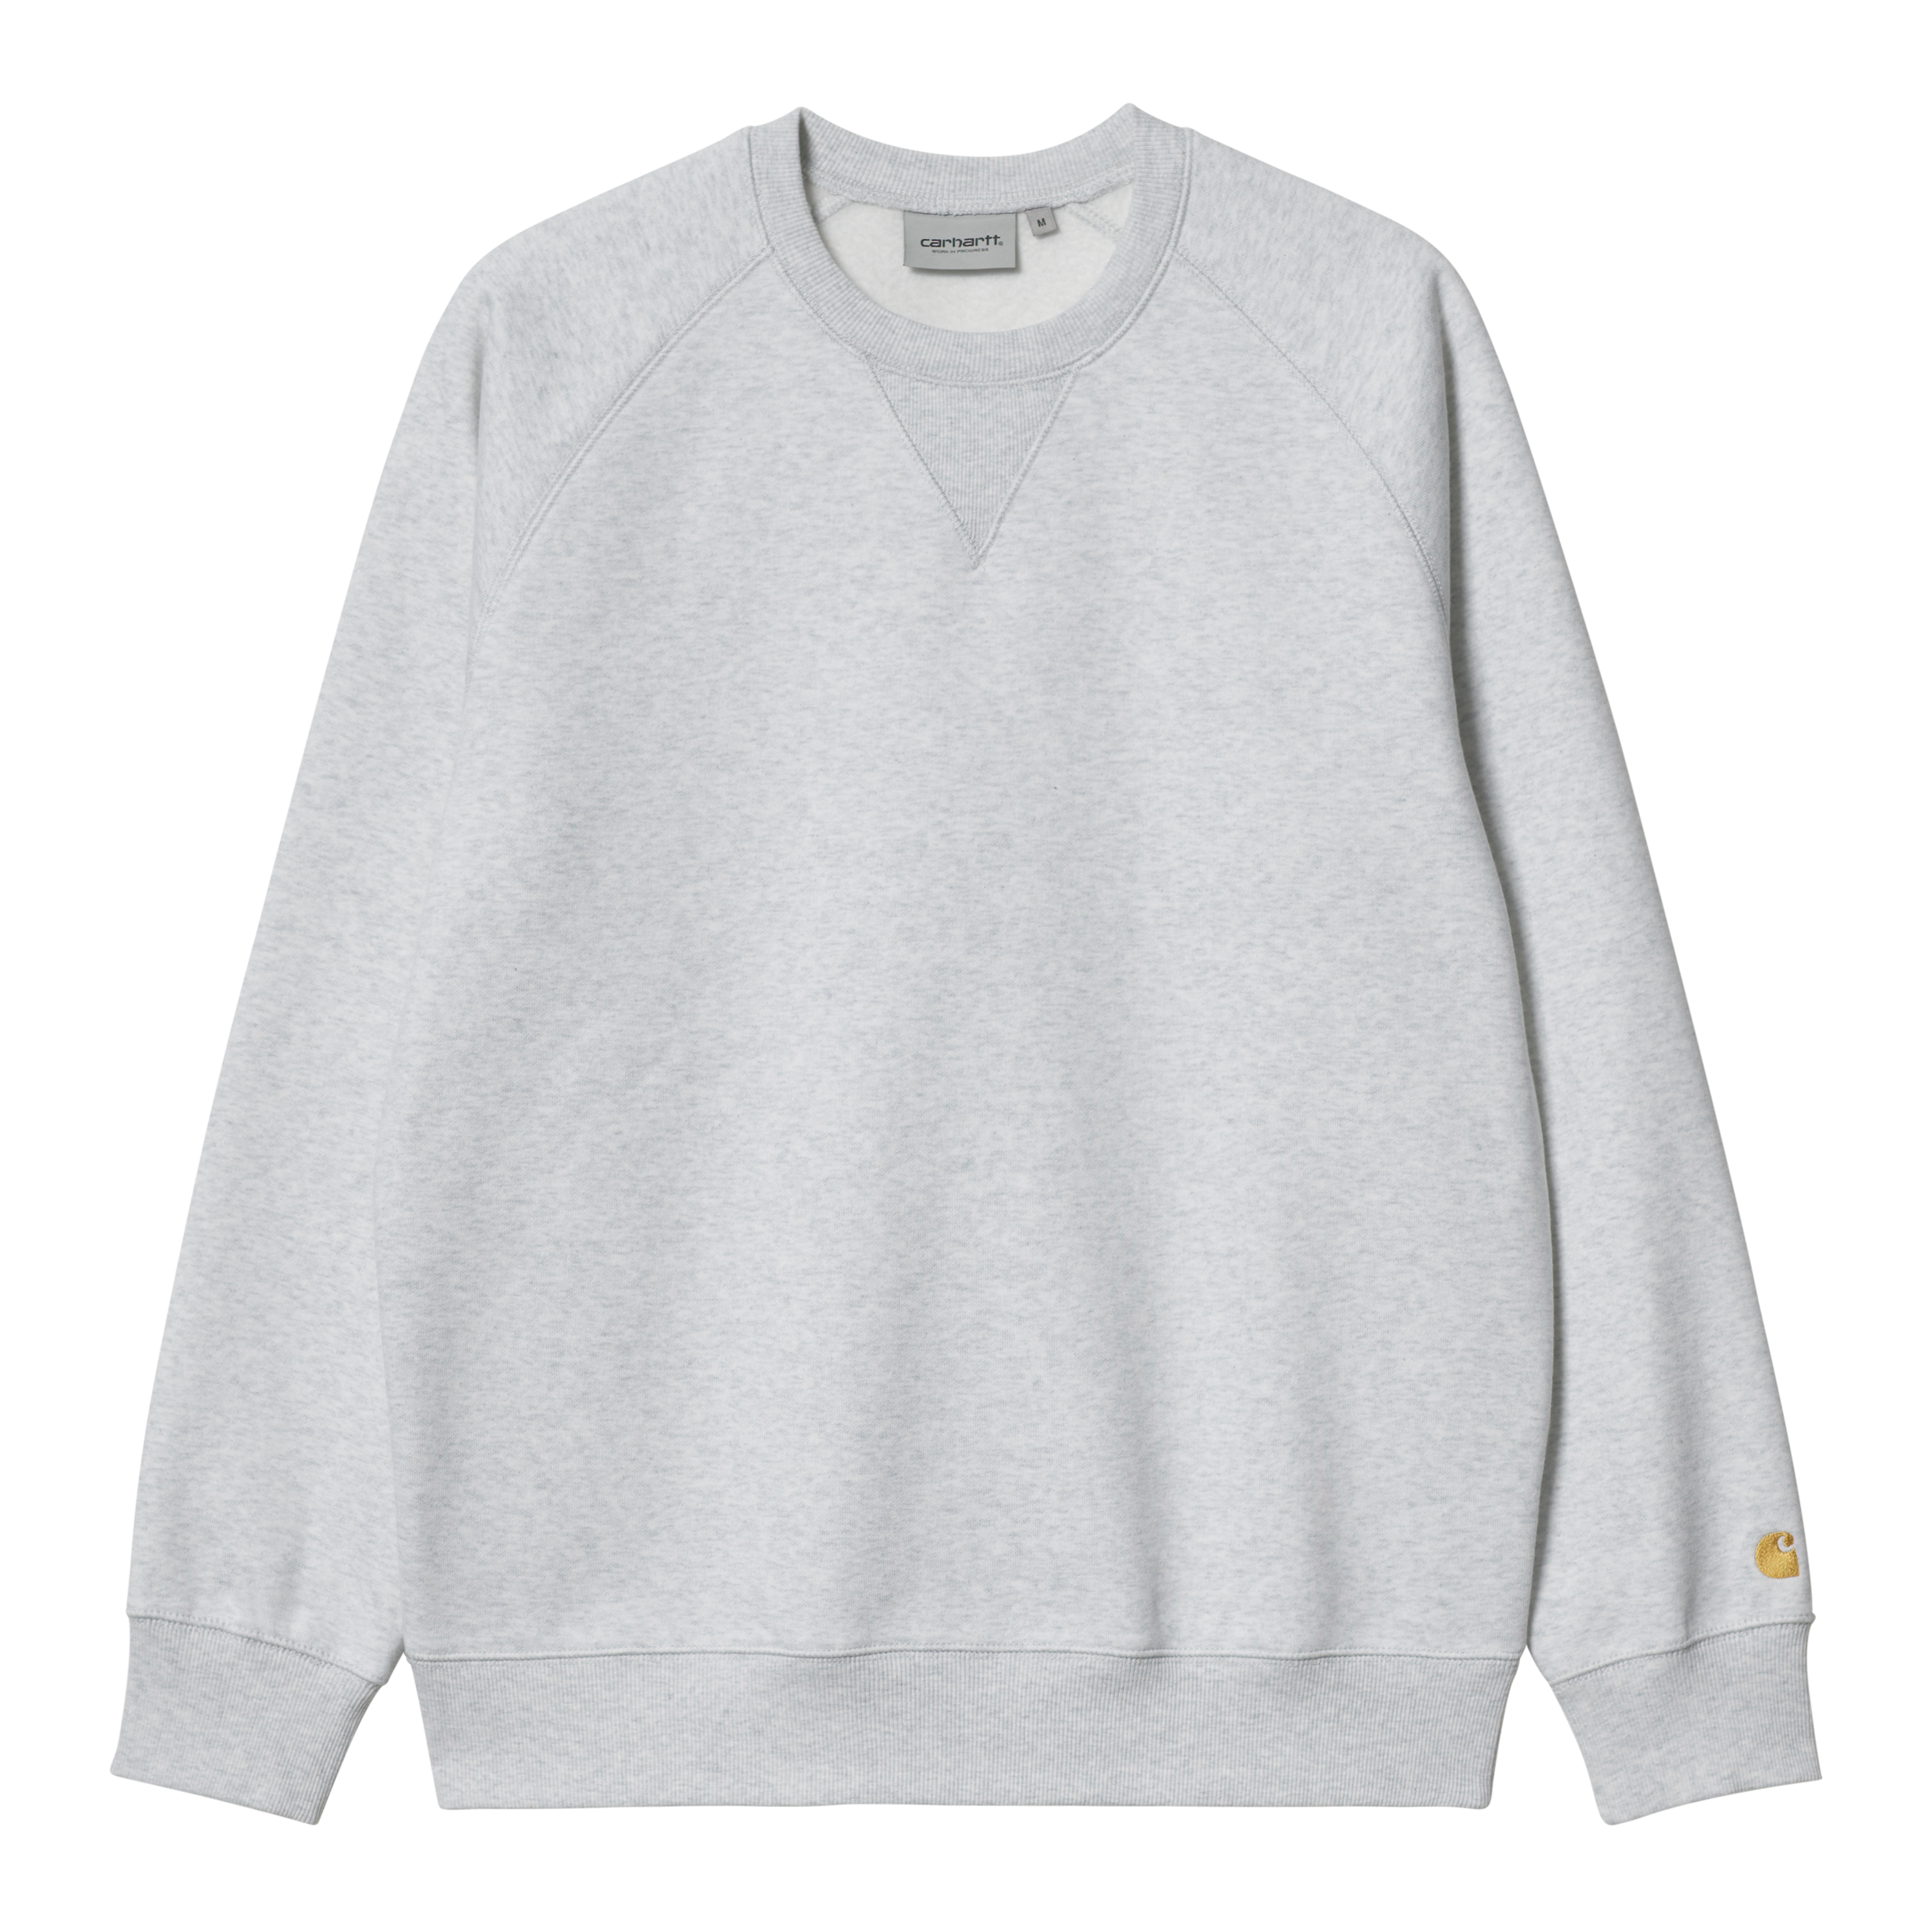 Carhartt WIP Chase Sweatshirt in Grey